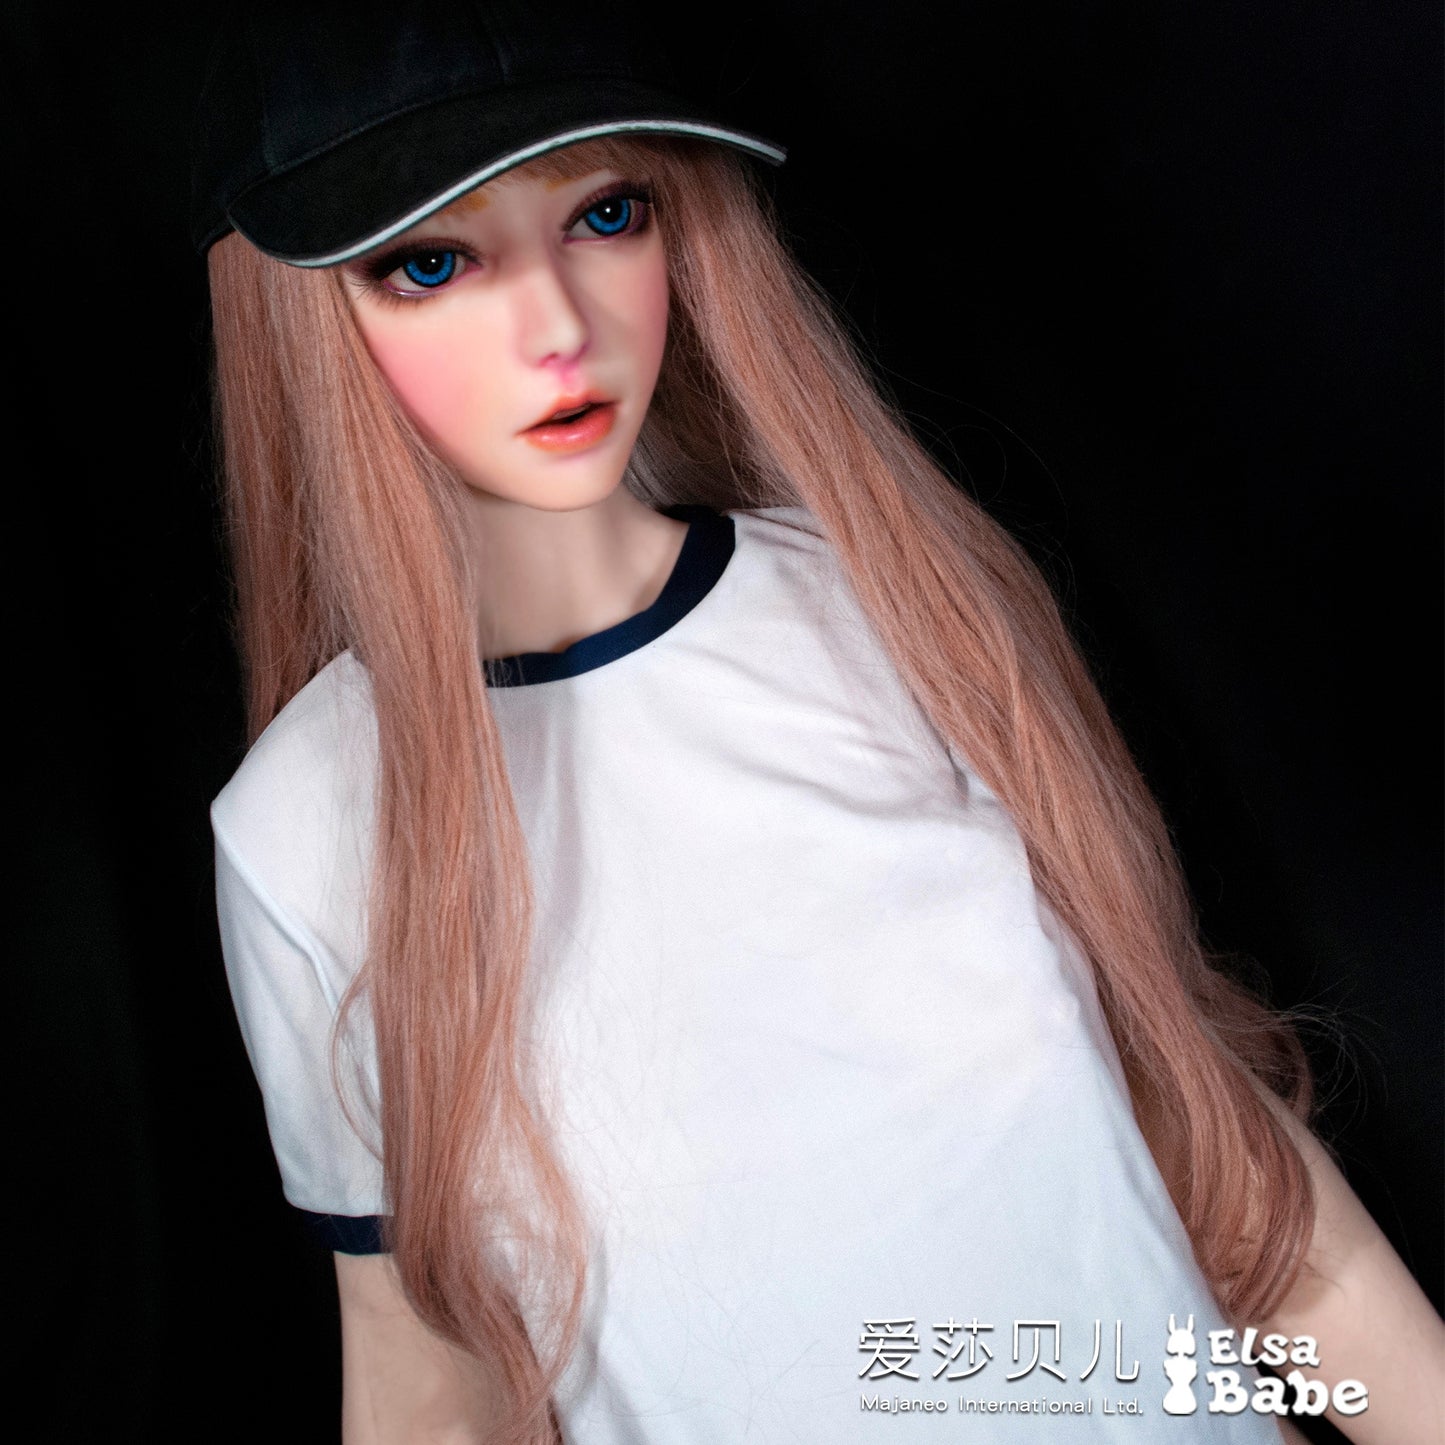 ElsaBabe, muñeca sexual de silicona de platino con pechos grandes de 165cm, cuerpo de figura de Anime, juguete erótico sólido Real con esqueleto de Metal, Sakuraki Koyuki